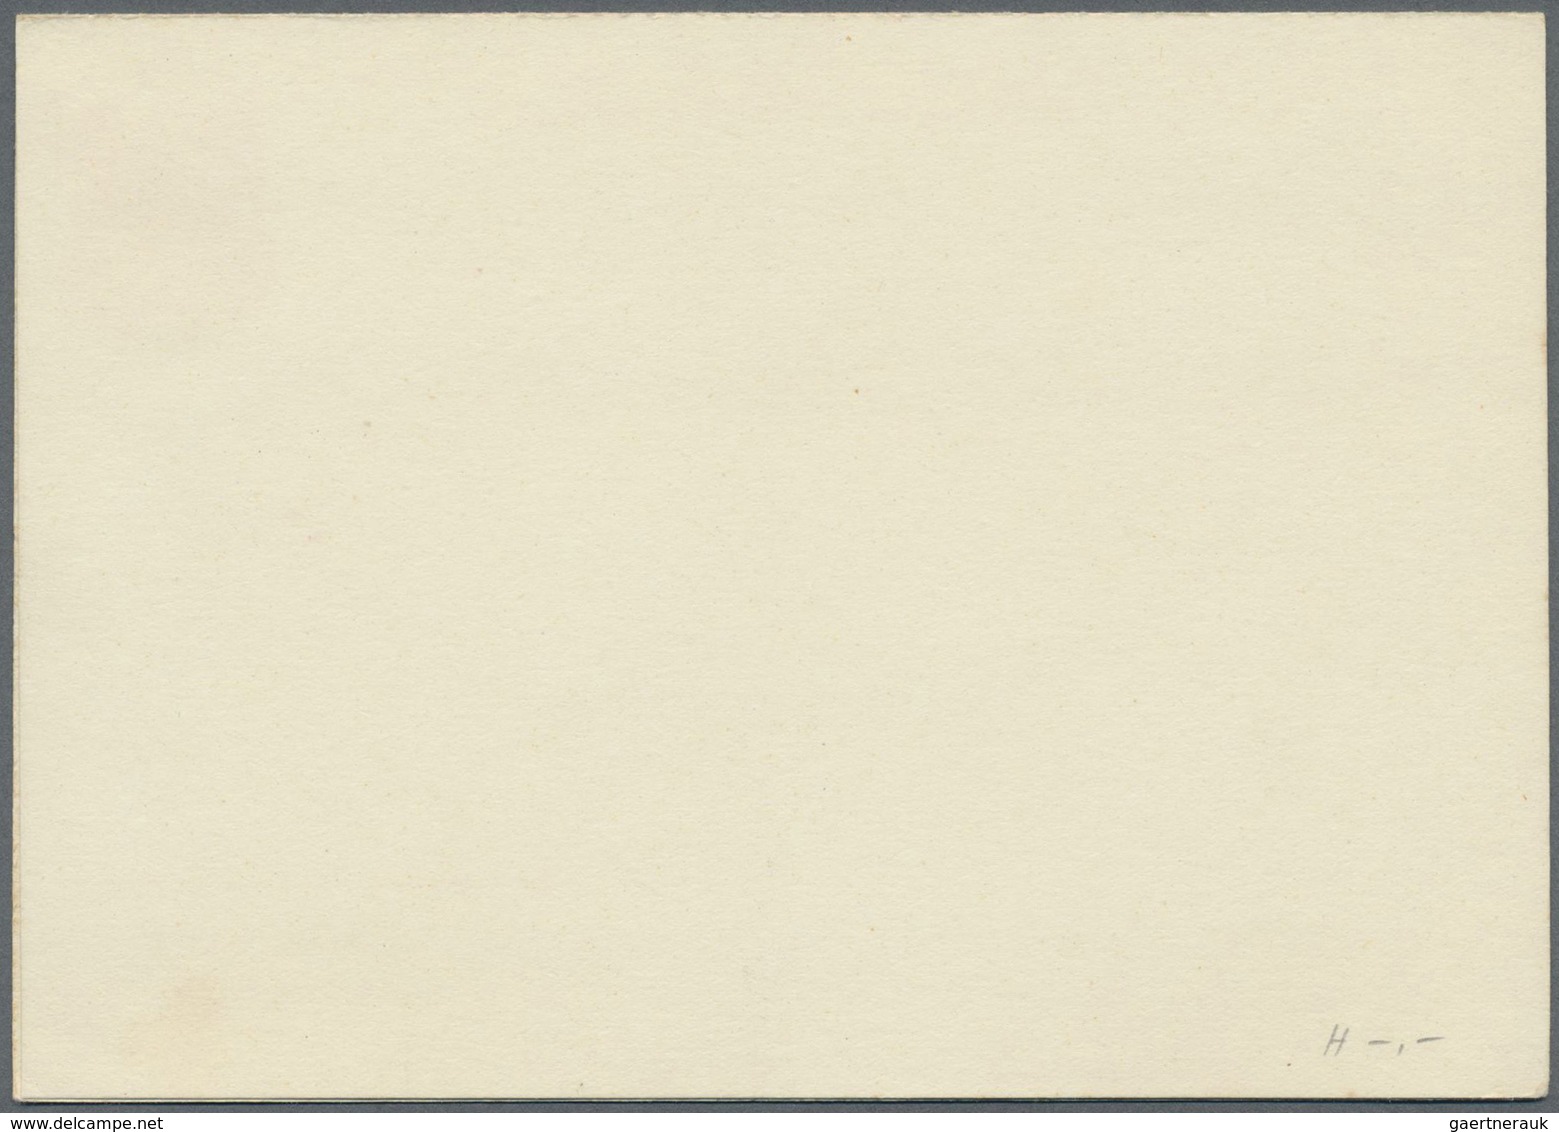 GA Italien - Ganzsachen: 1956: 35 L + 35 L Bilingual Replay Postal Stationary Card, Unused, Rare. (Mi. - Entiers Postaux